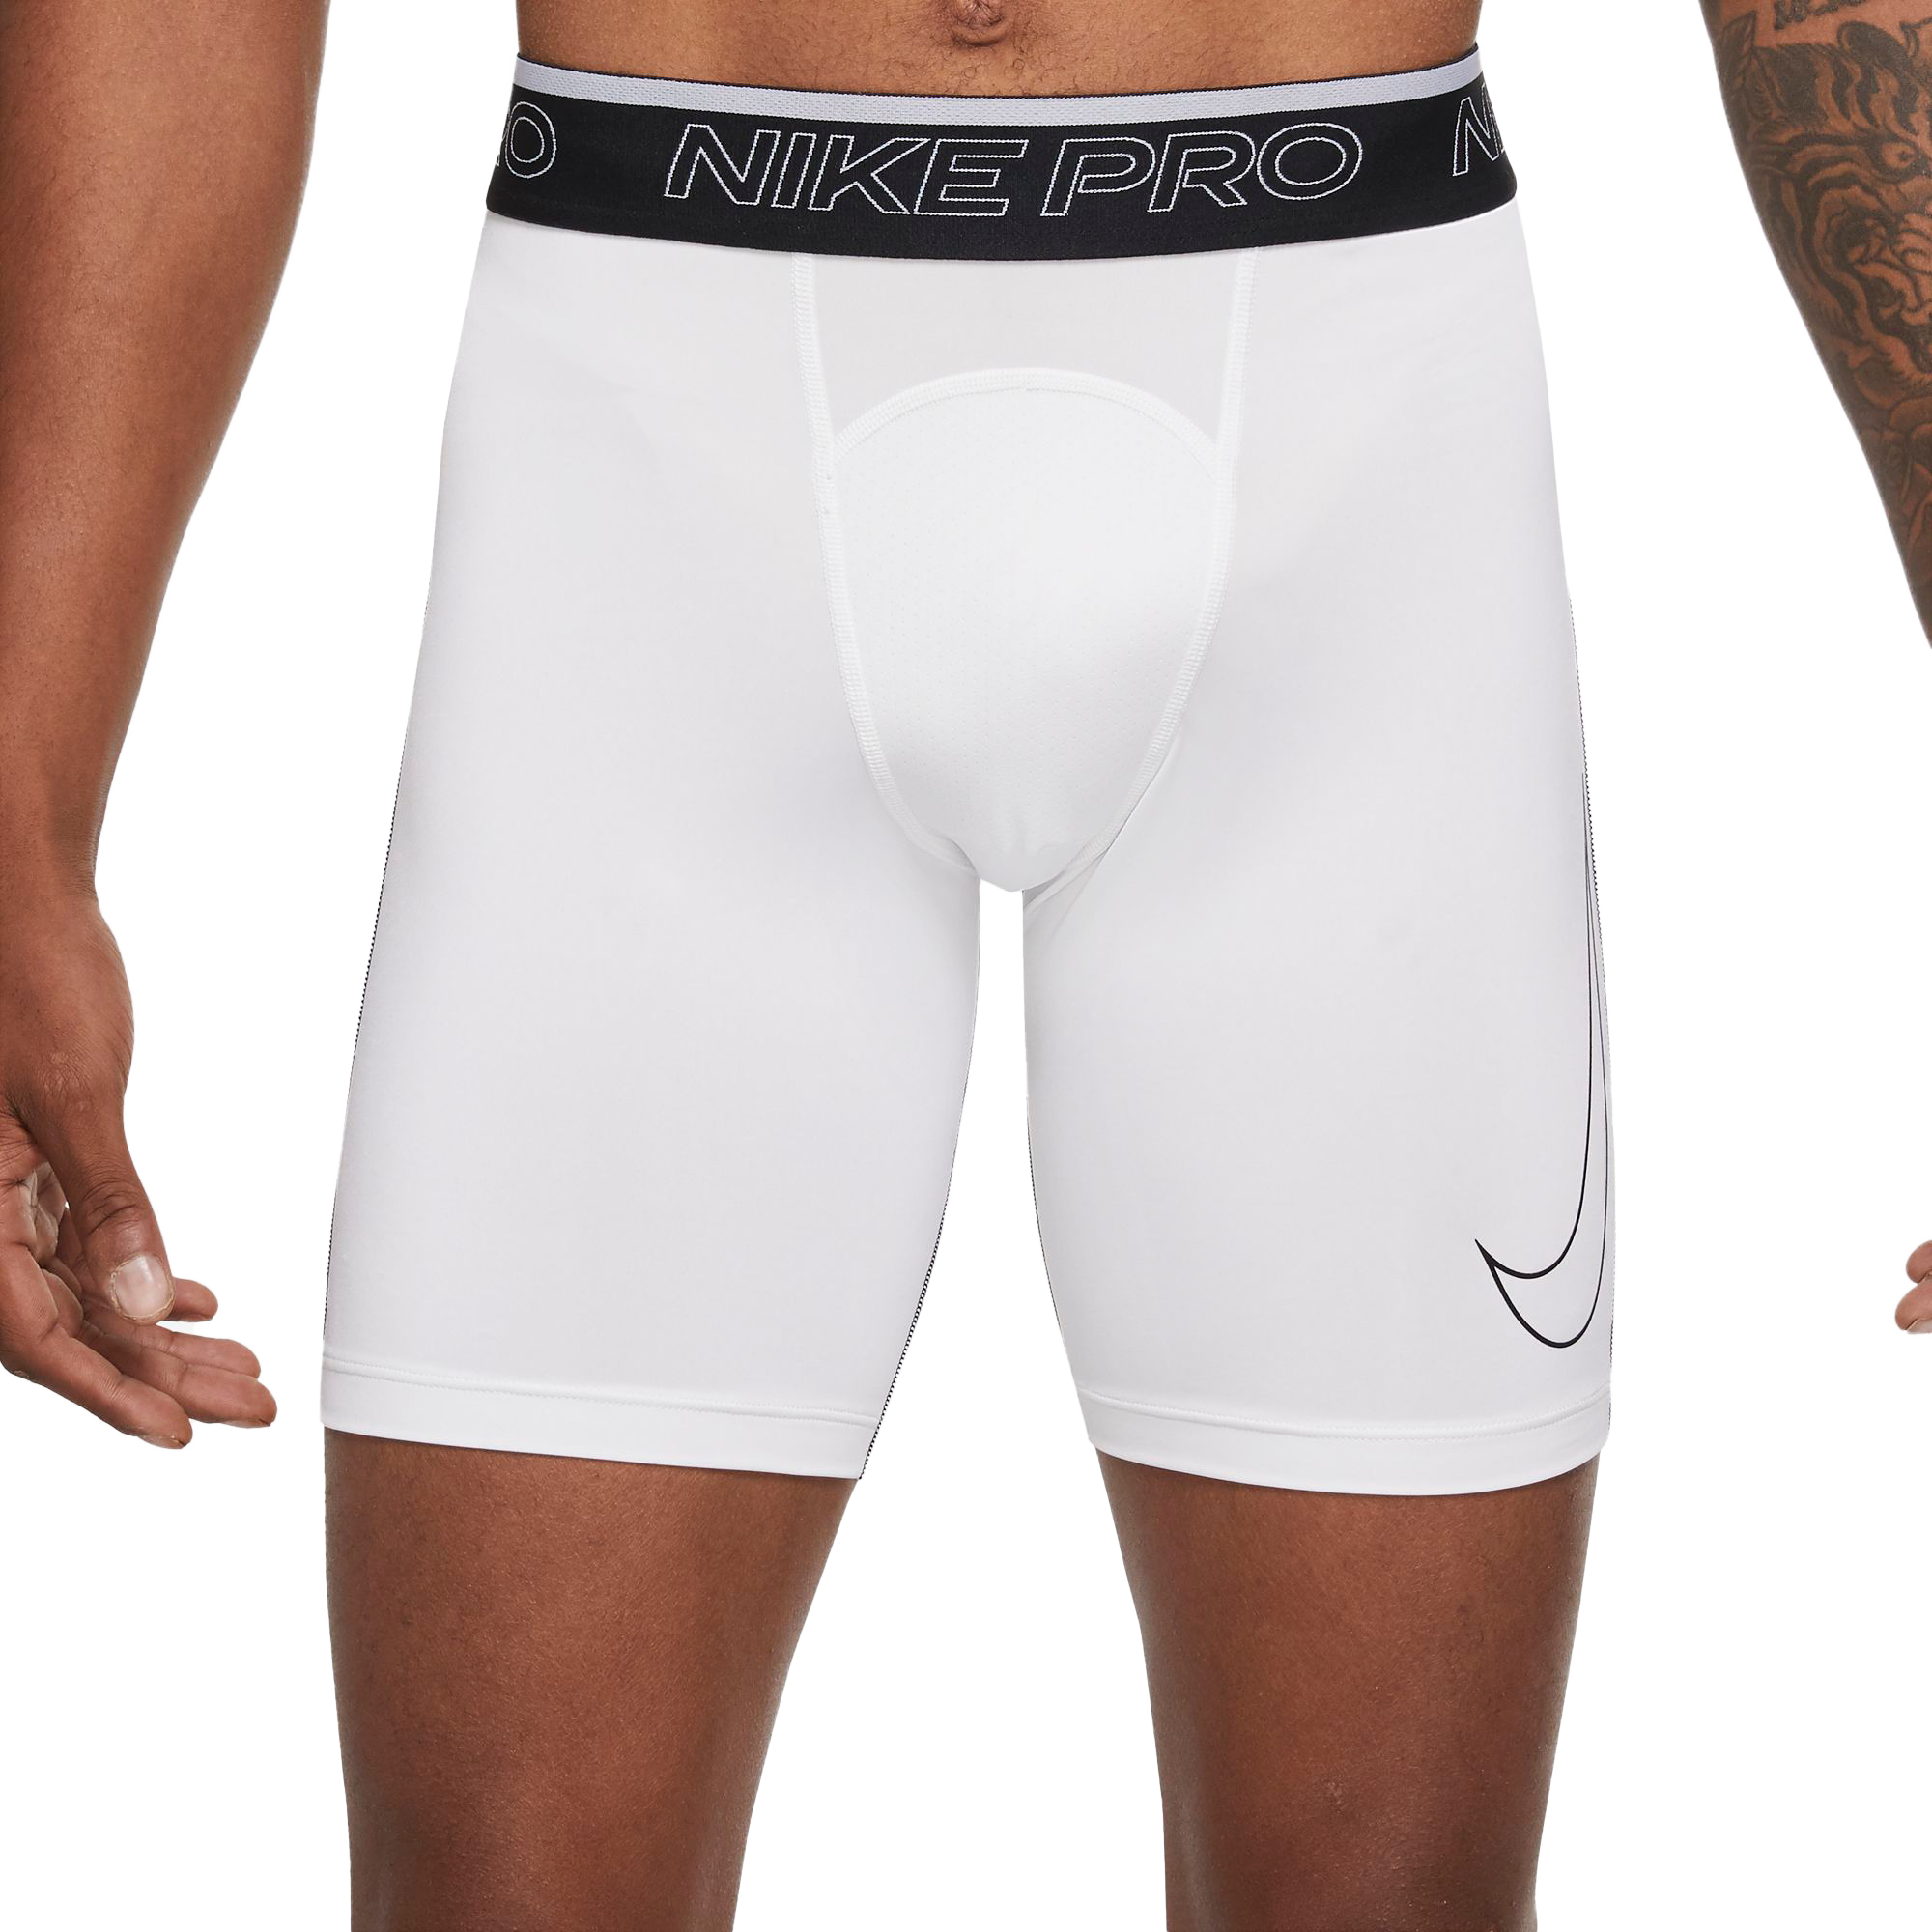 nike pro combat men's 6 compression shorts underwear black size